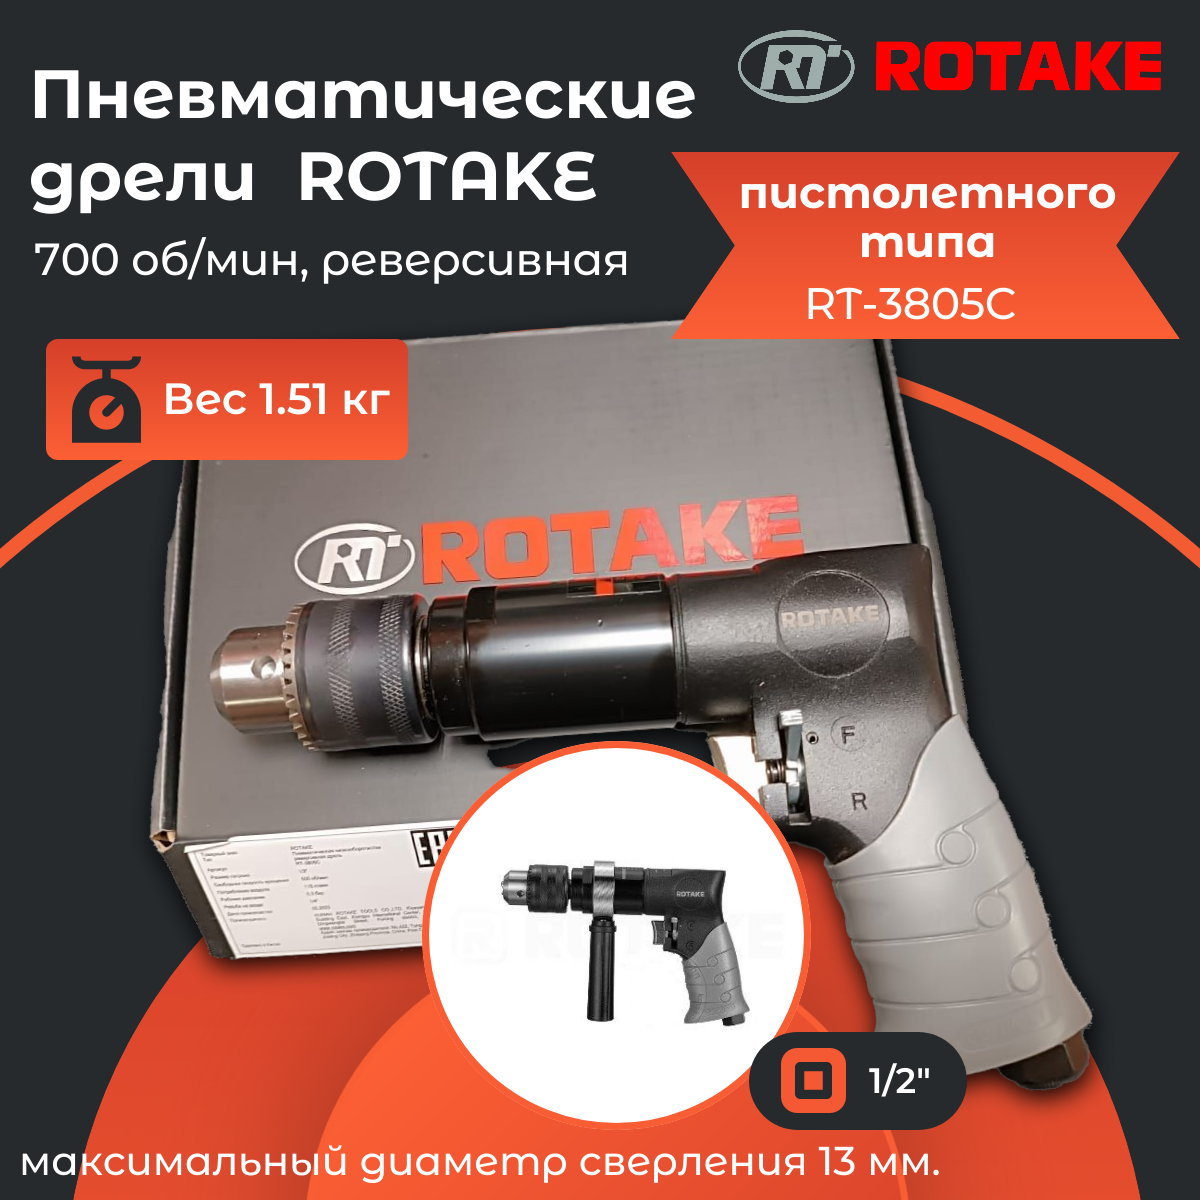 Rotake RT-3805C Пневмодрель 1/2", 700 об/мин, реверсивная, 1.51 кг